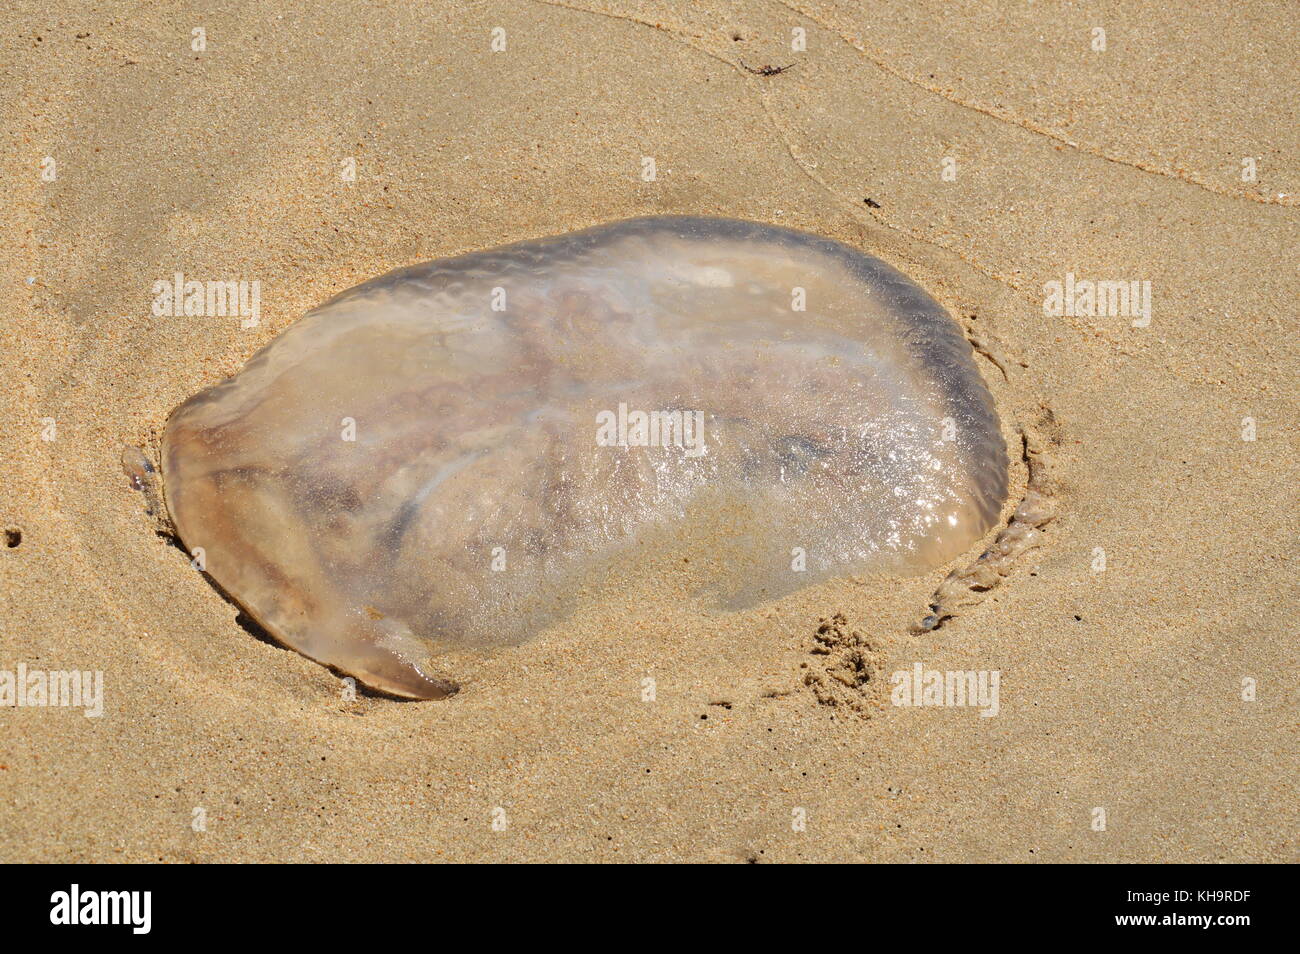 jellyfish strand on the beach Stock Photo